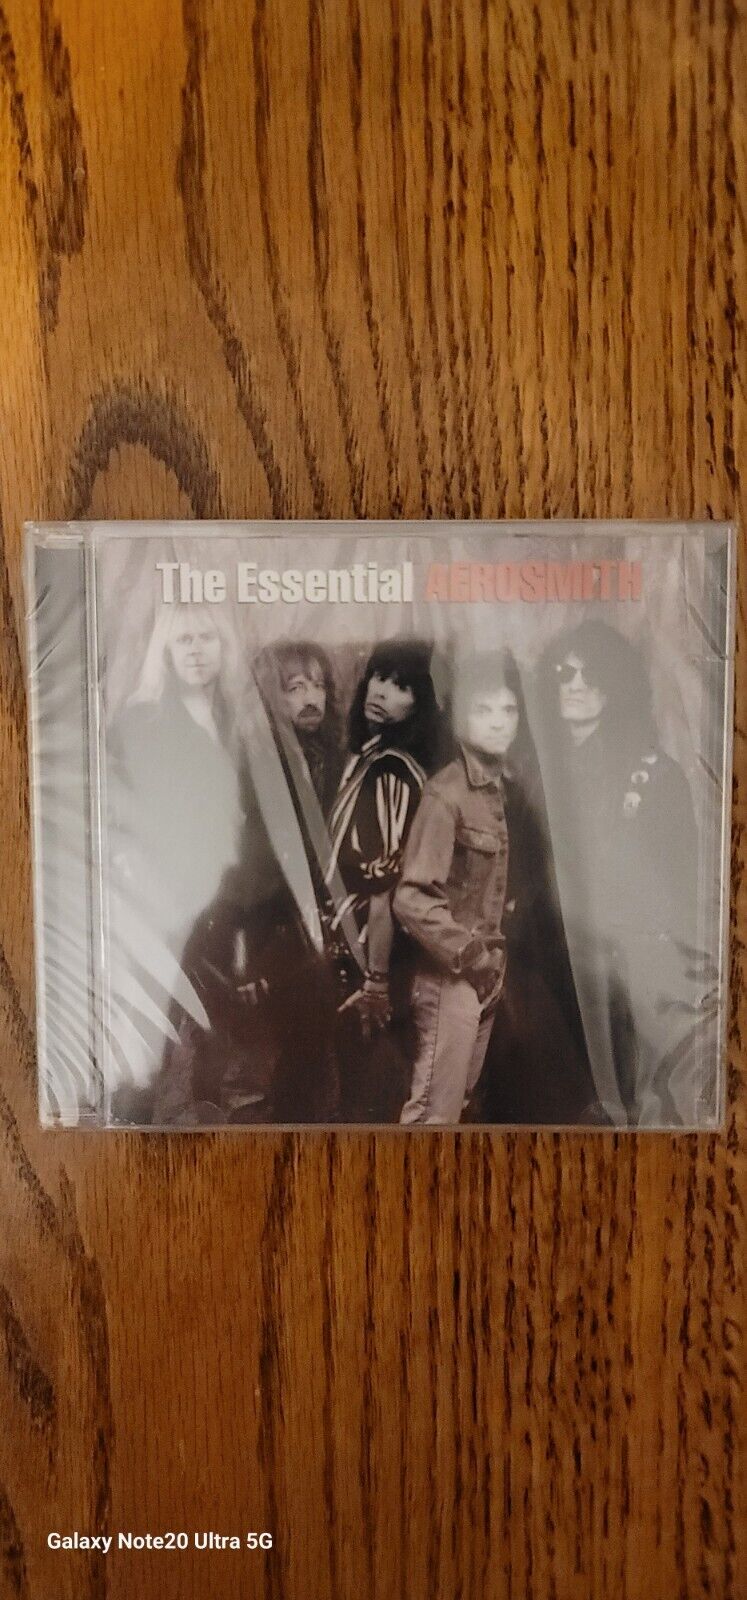 Essential by Aerosmith (CD, 2011) - BRAND NEW